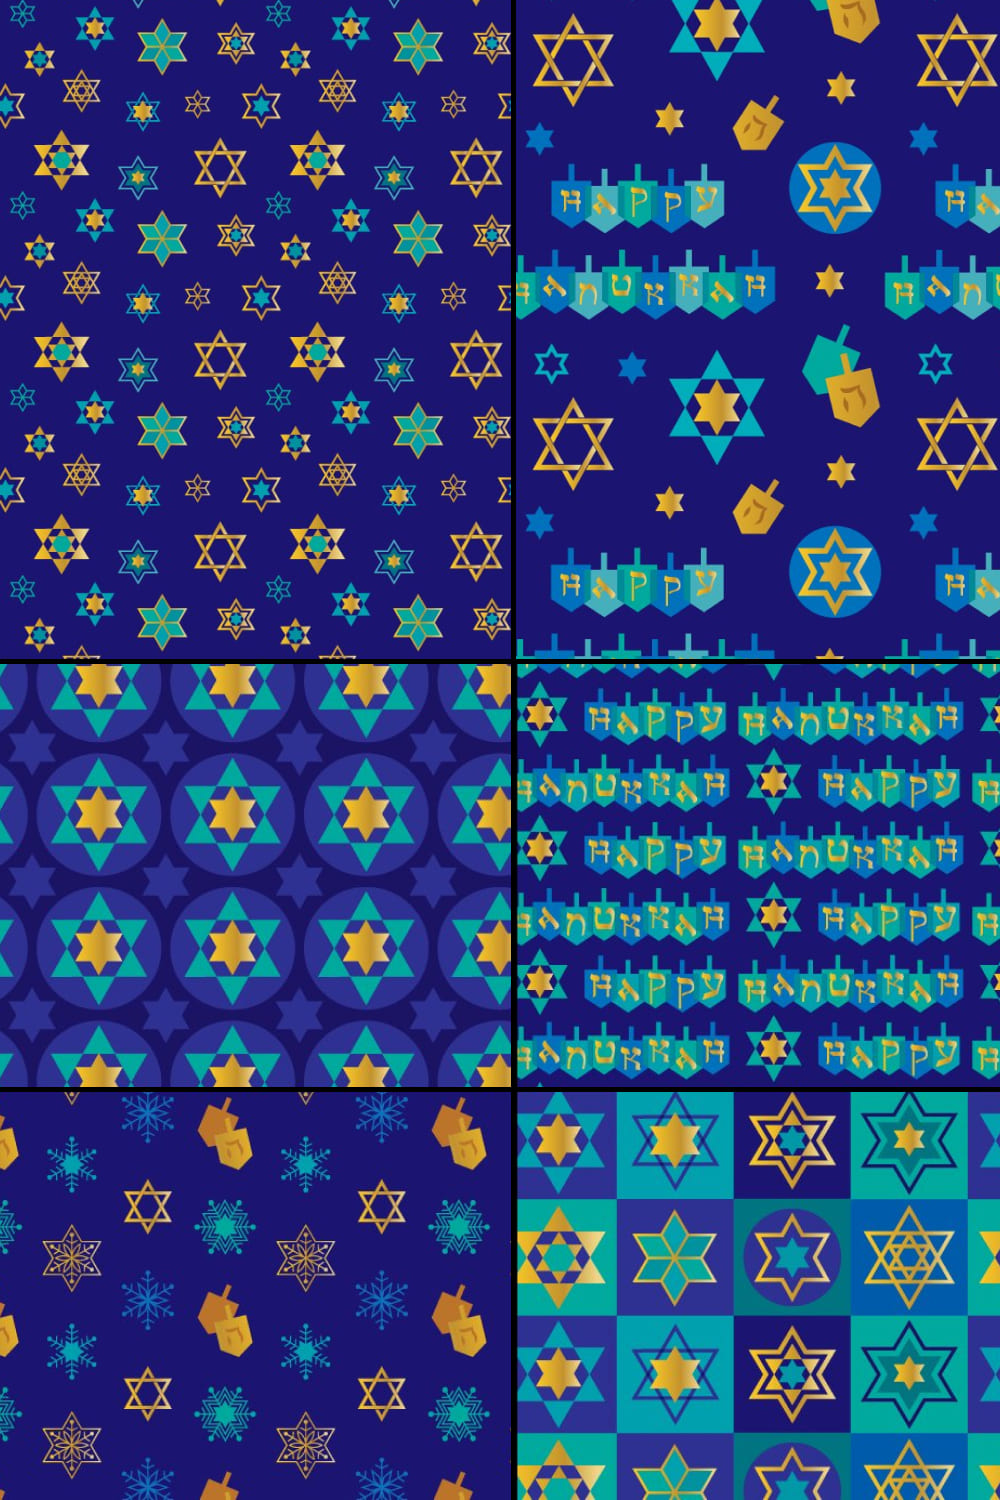 Background images for Hanukkah.